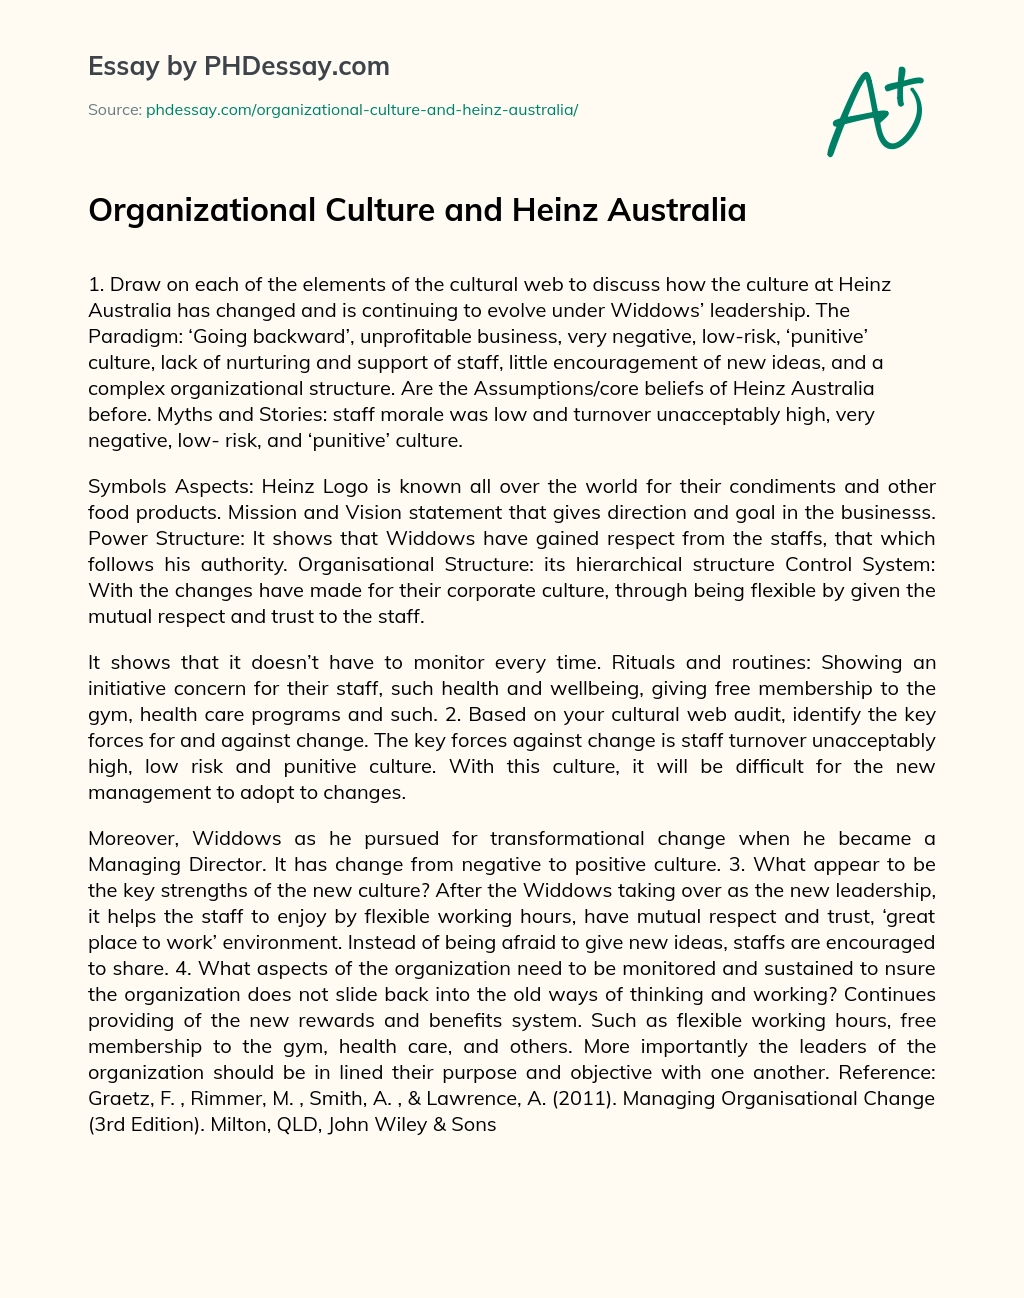 Organizational Culture and Heinz Australia essay